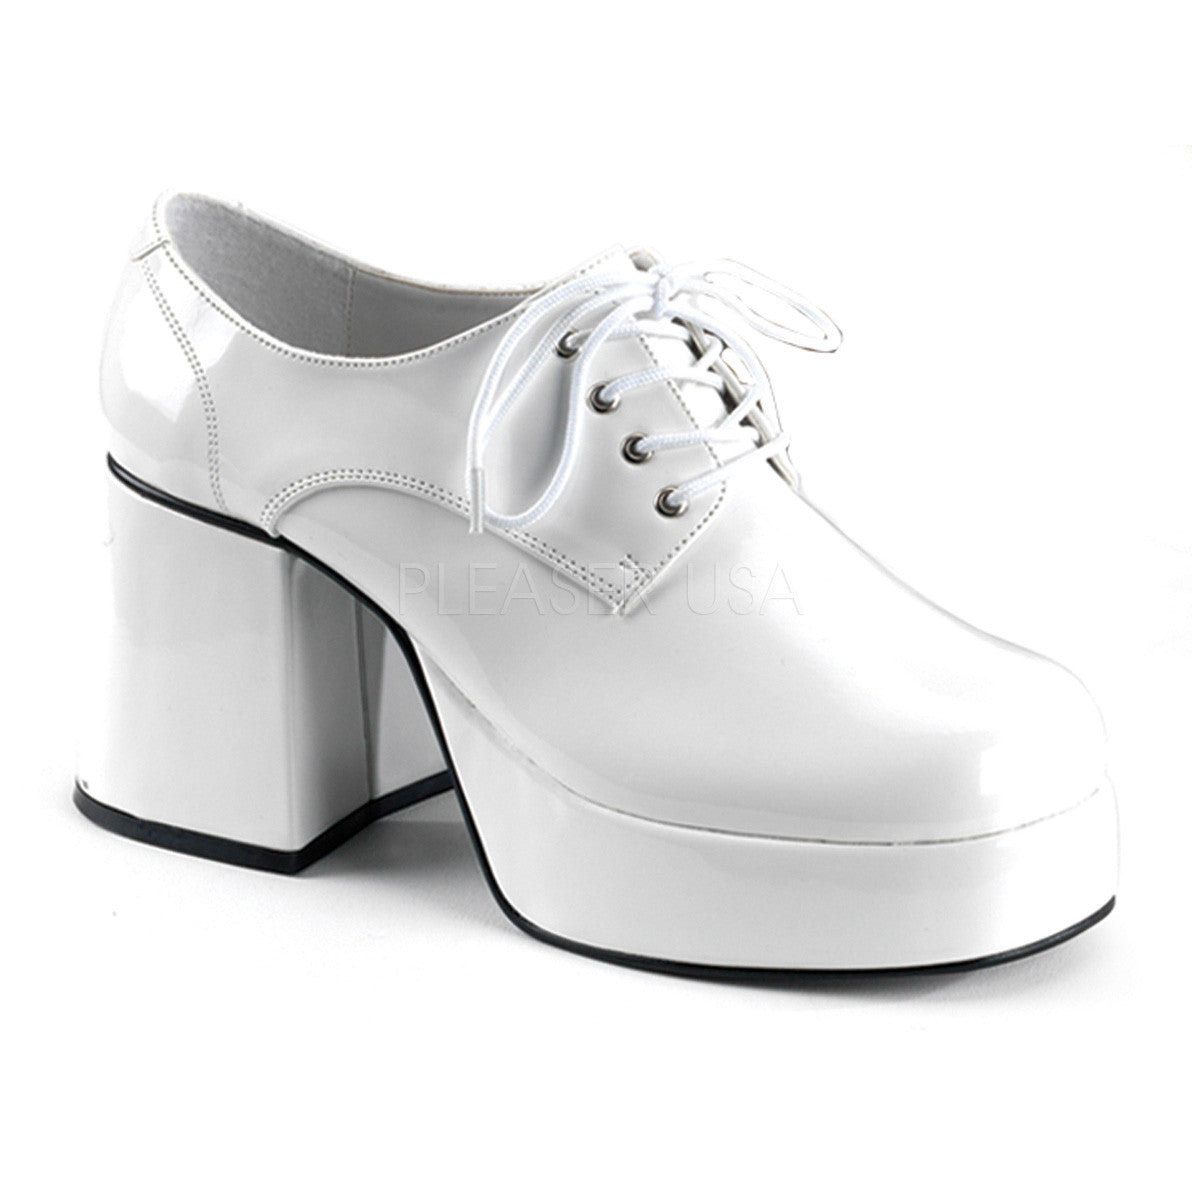 Men's White Pat Disco 70s Platform Retro Costume Shoes - Shoecup.com